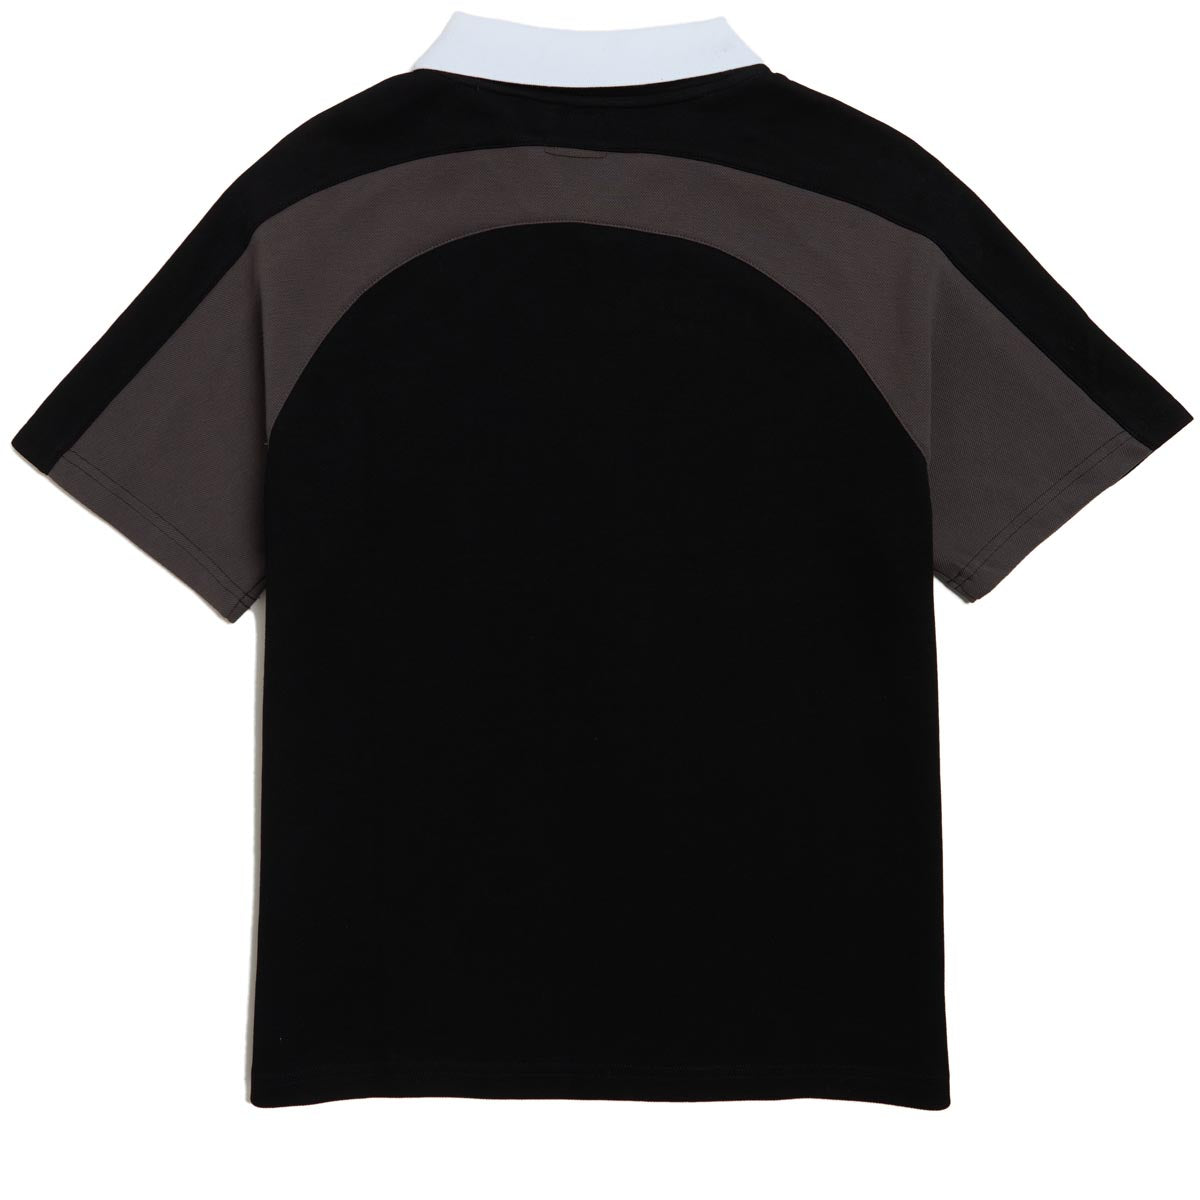 Theories Midfield Pique Polo Shirt - Black/Grey image 2